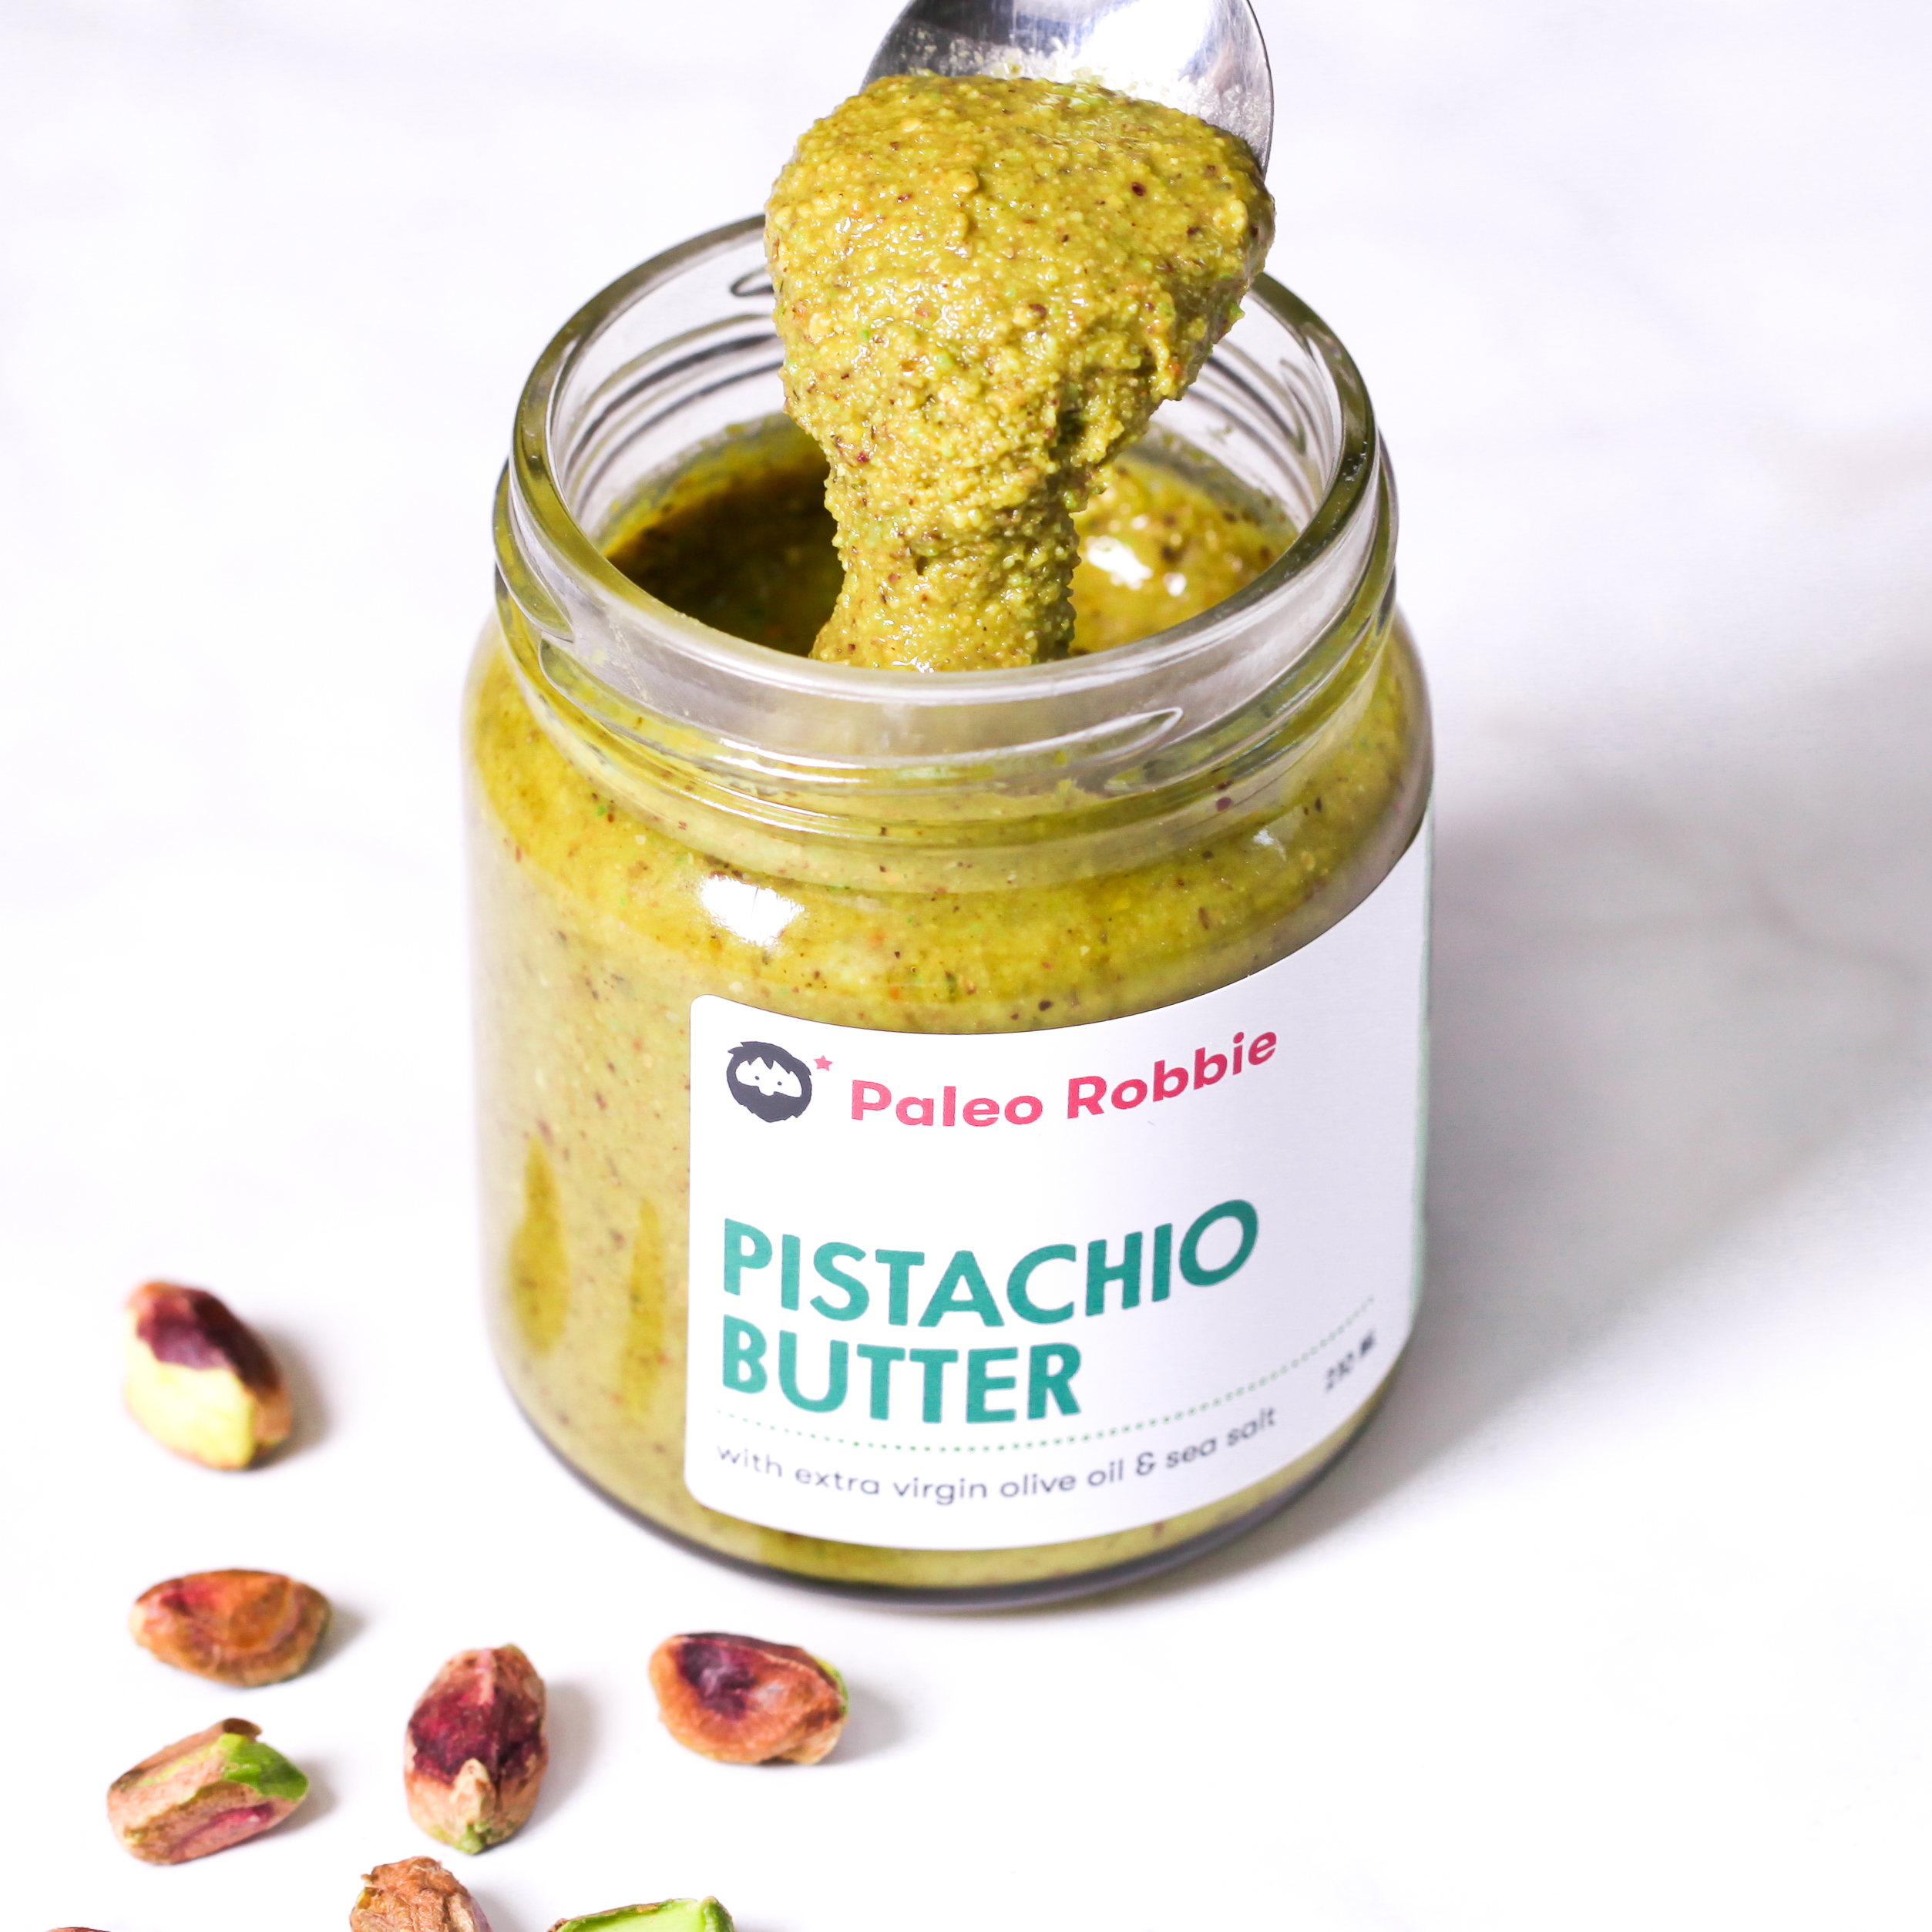 Pistachio Butter with extra virgin olive oil & sea salt